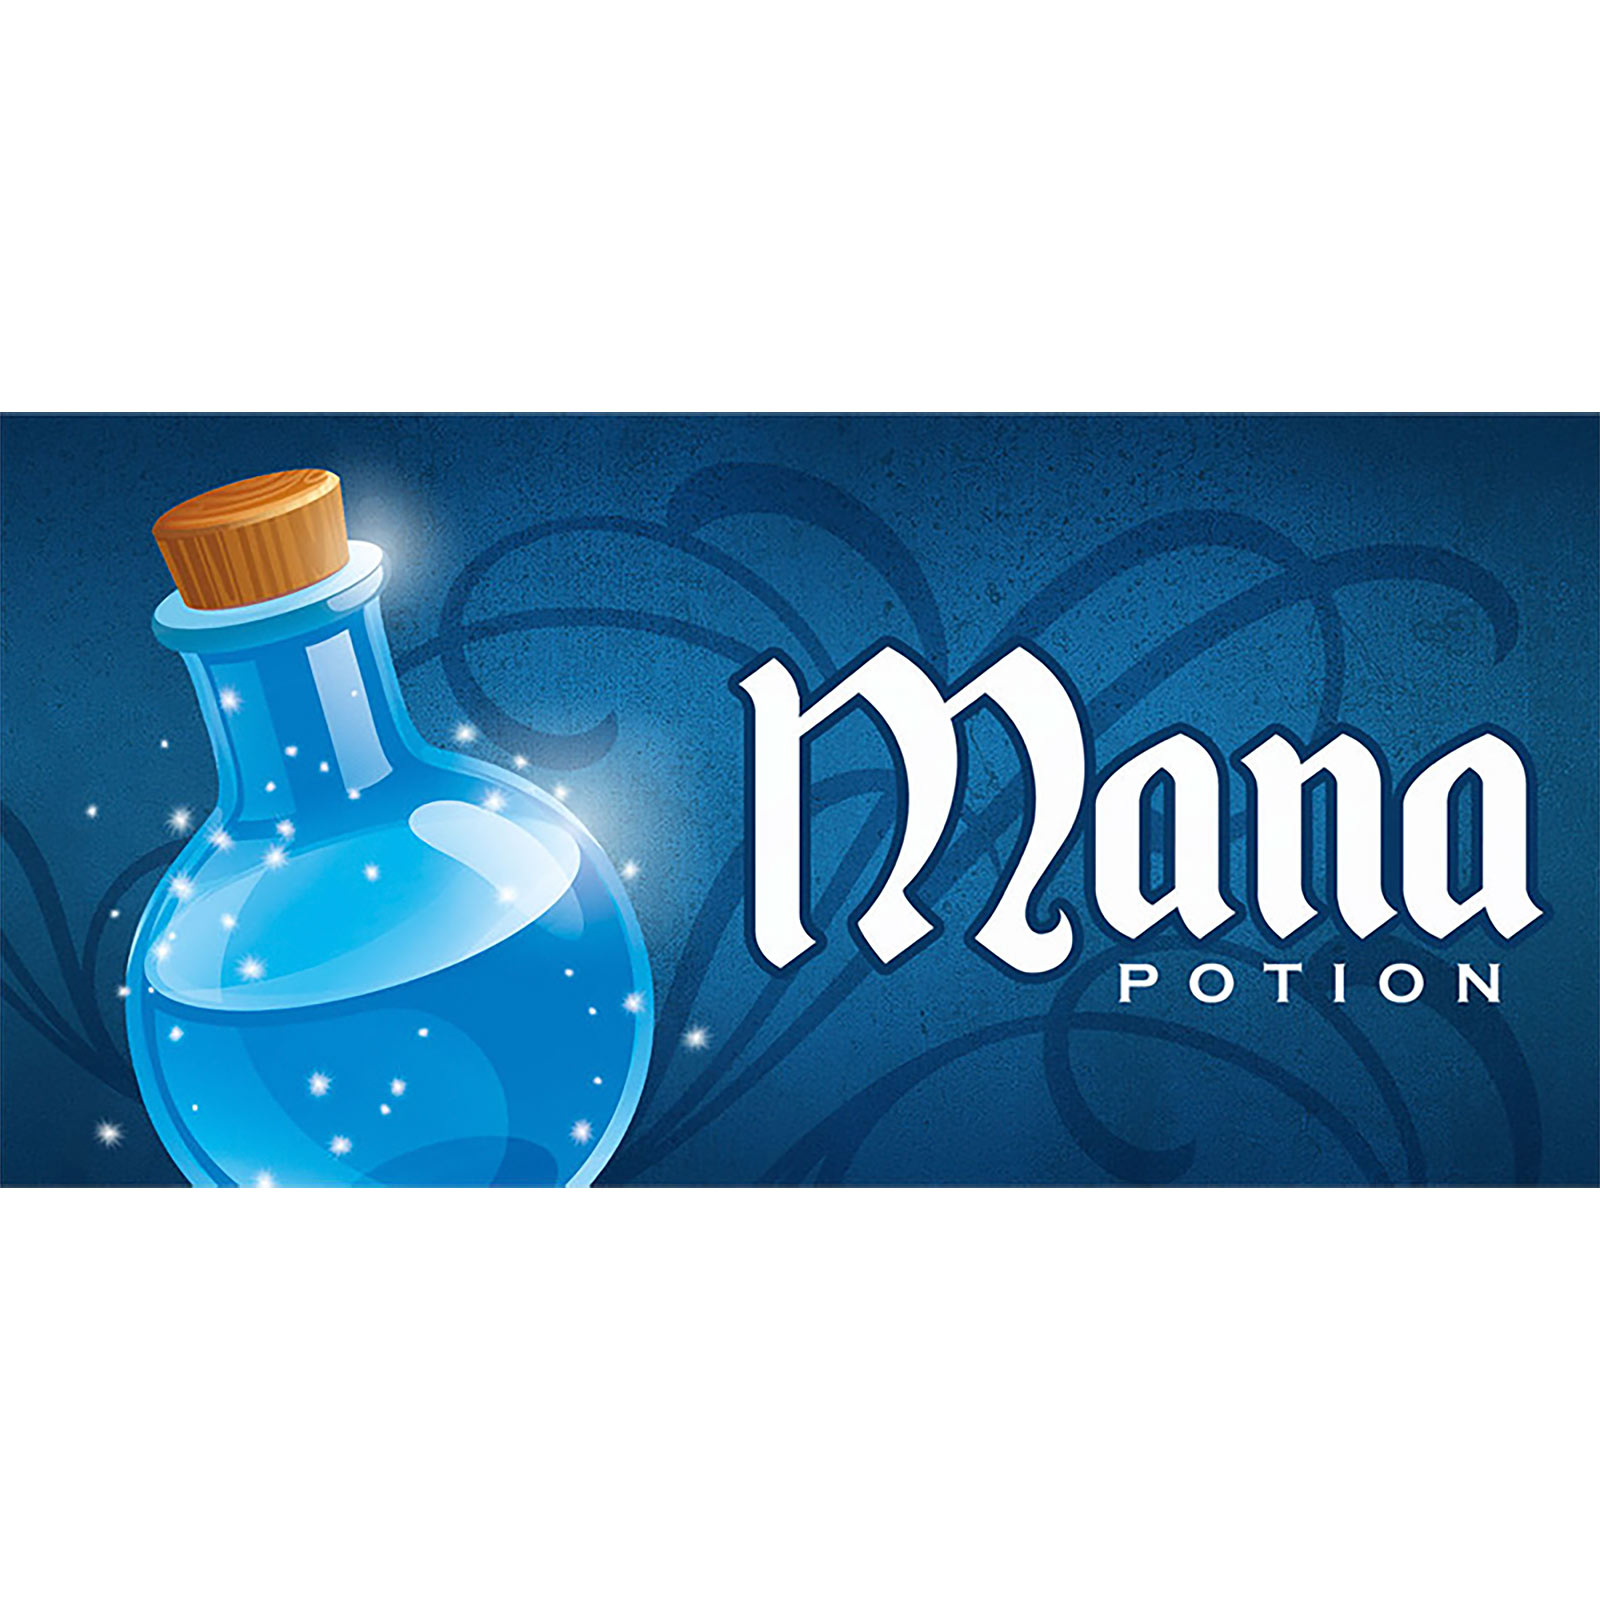 Mana Potion Mug for Gaming Fans